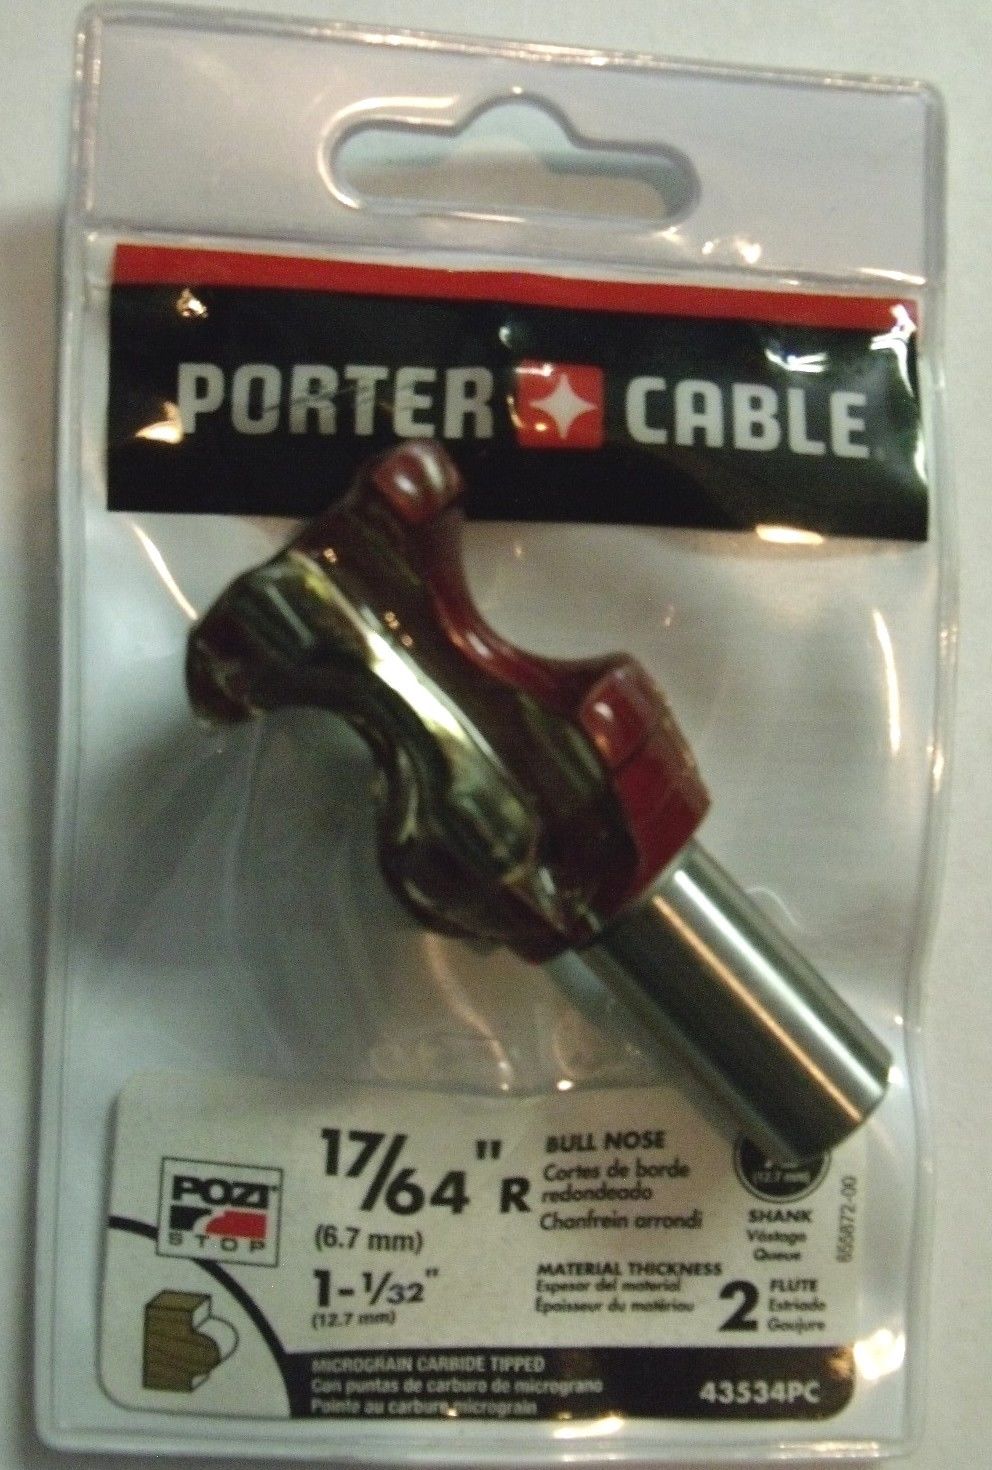 Porter Cable 43534PC 17/64" Radius Bull Nose Router Bit 1/2" Shank